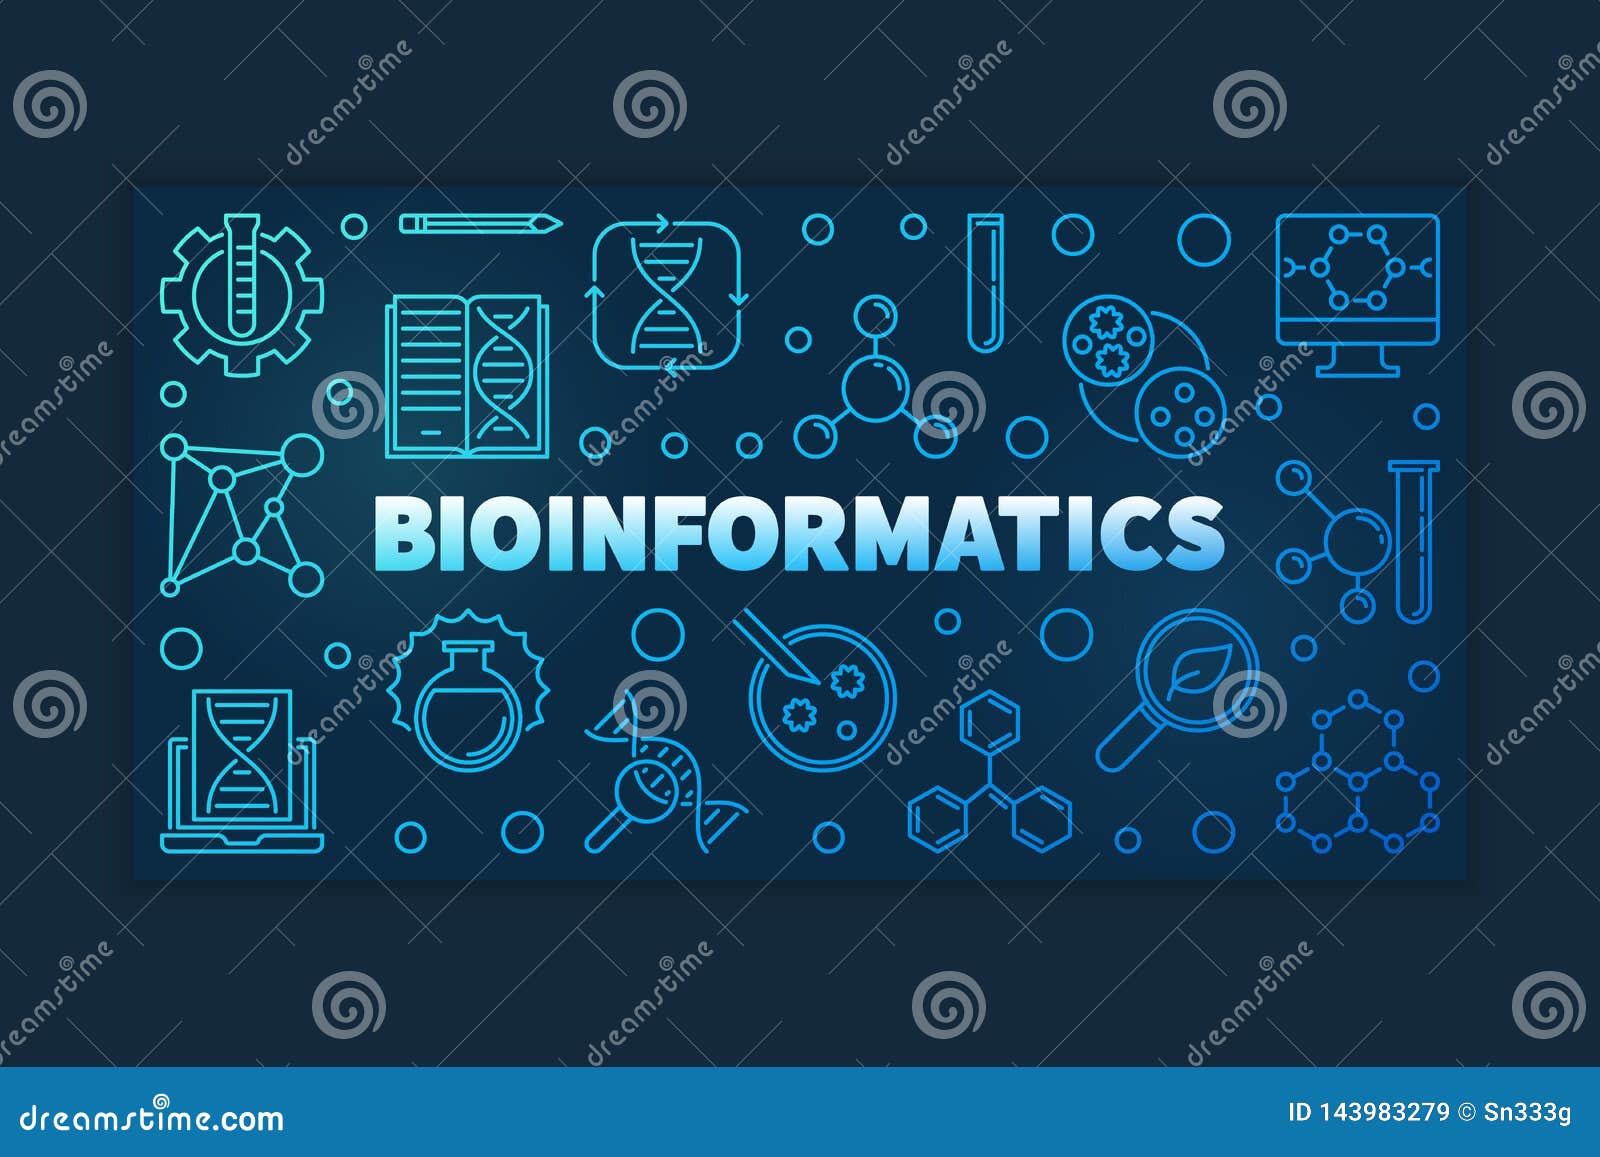 Bioinformatics Ppt Templates Free Download